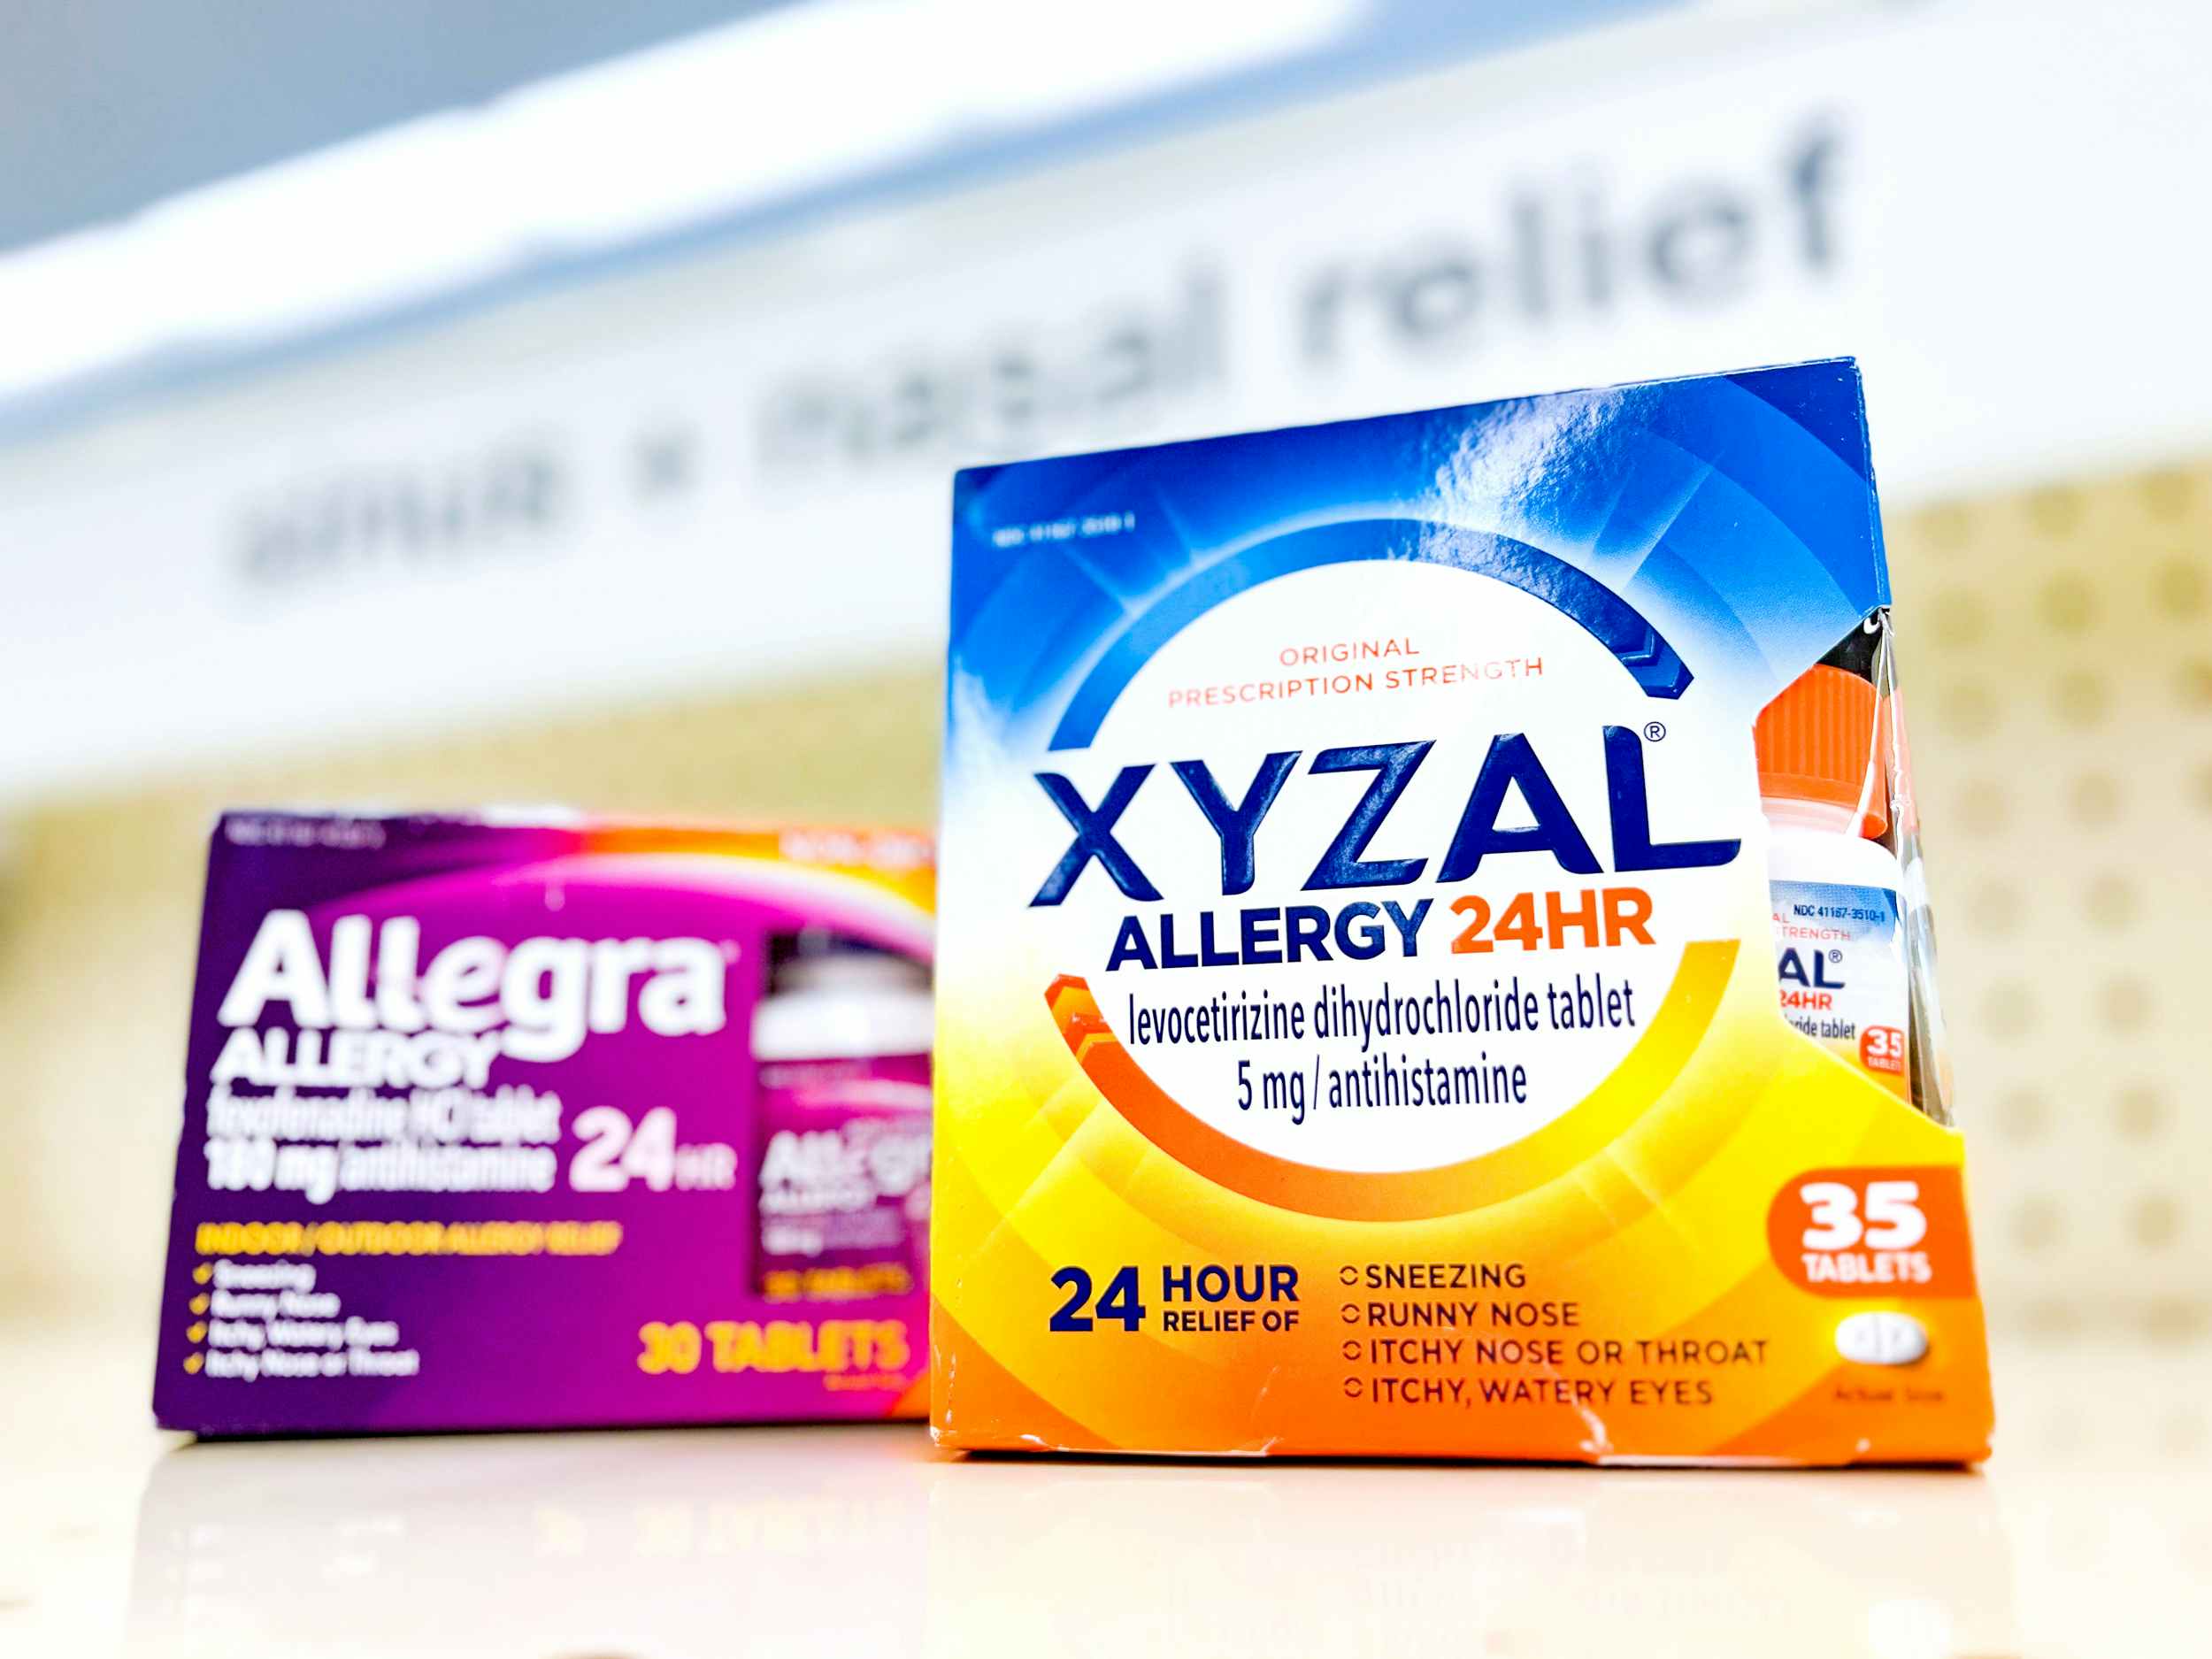 allegra and xyzal allergy medication in walgreens pharmacy aisle